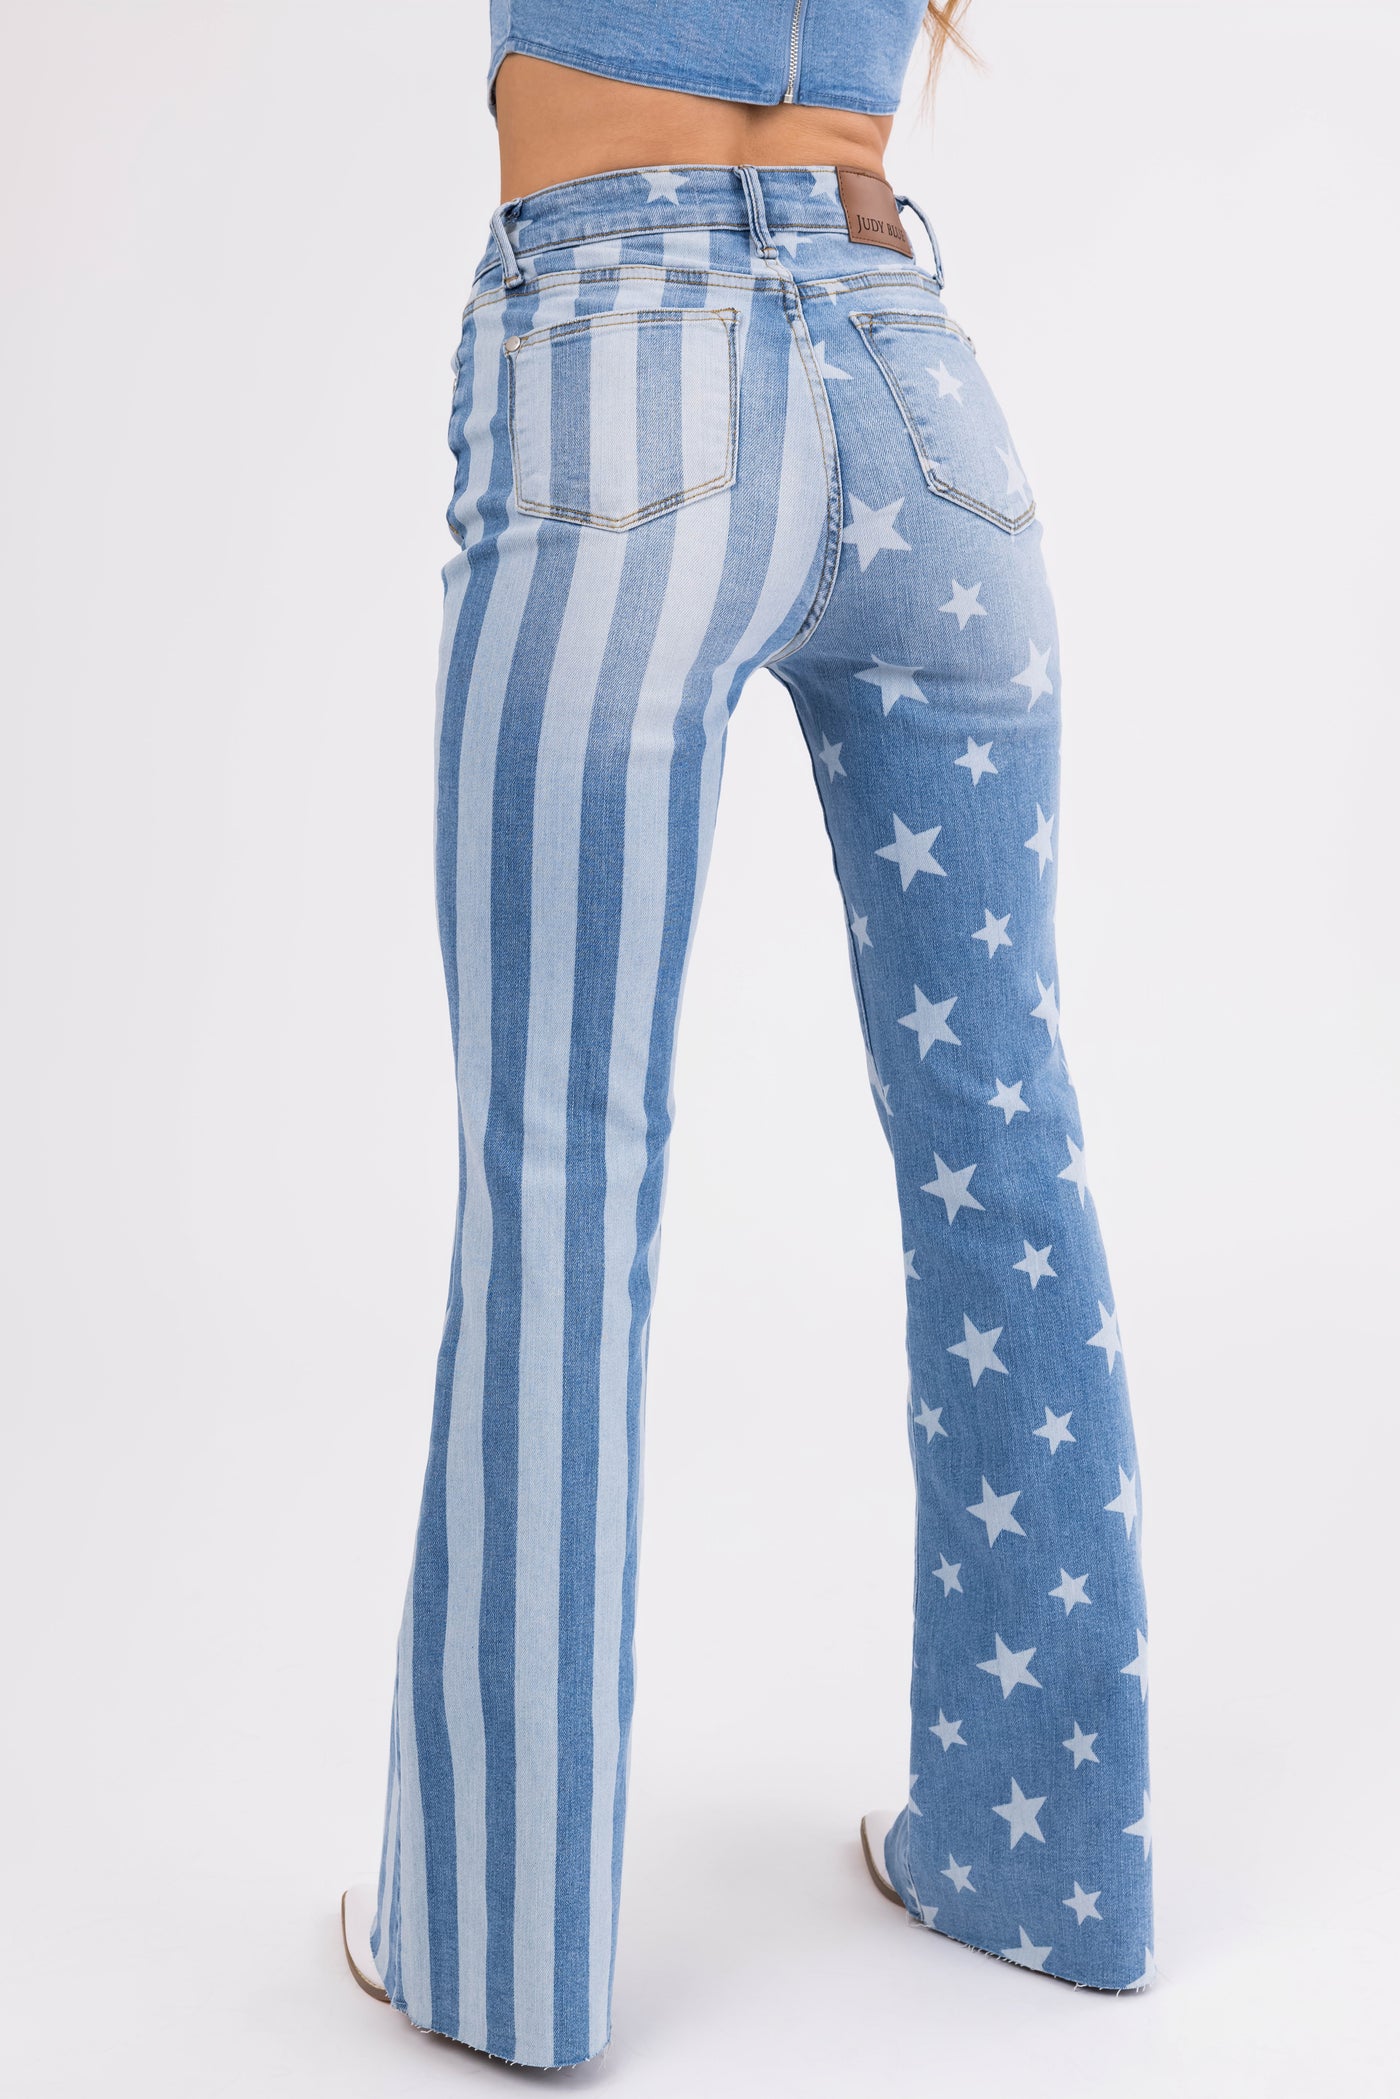 Judy Blue Medium Wash Stars and Stripes Jeans